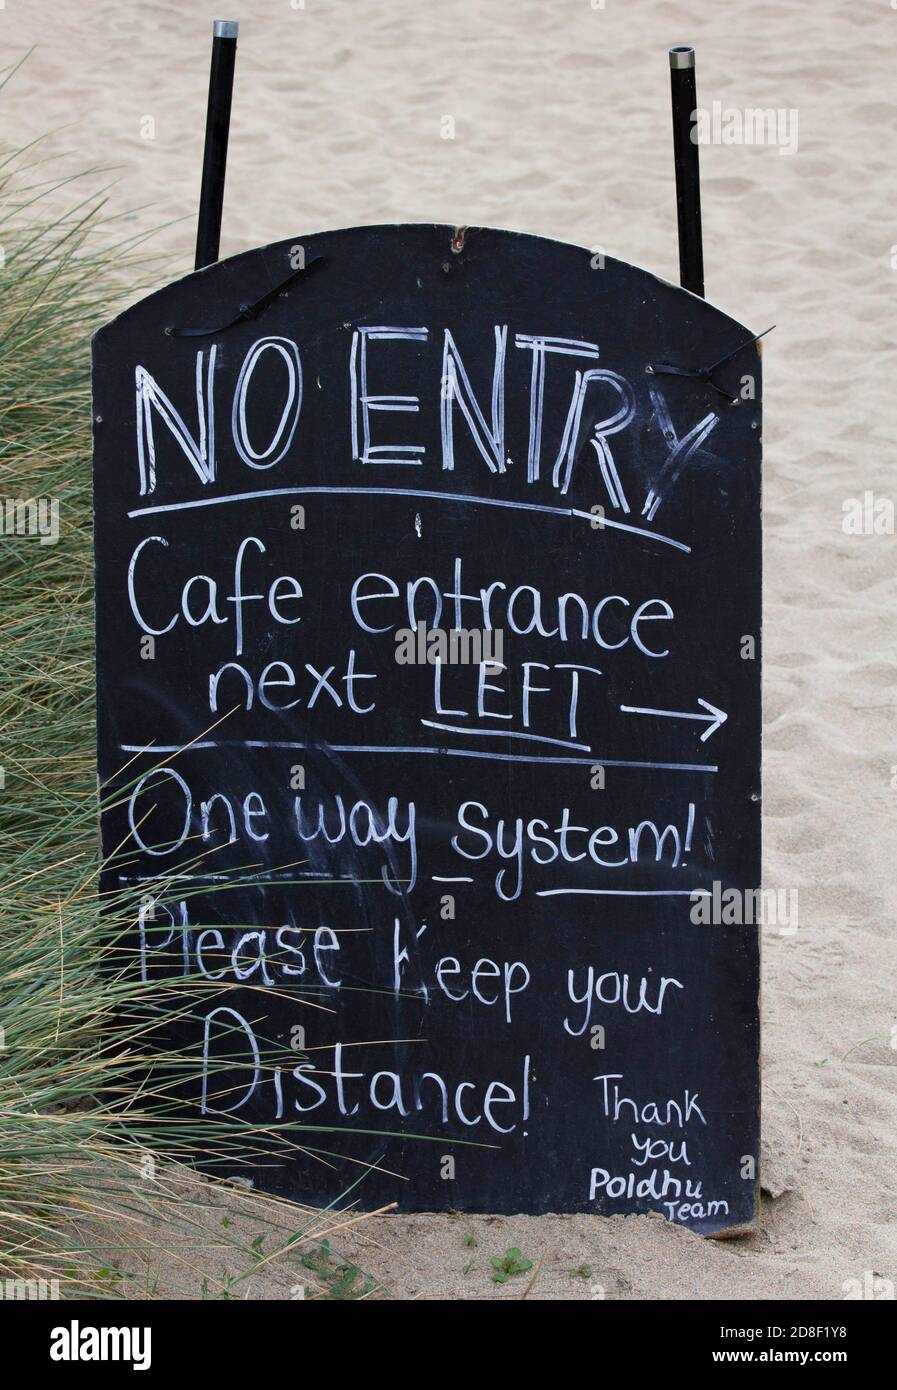 No entry sign at Poldhu beach cafe during Covid 19 crisis requiring social distancing Stock Photo